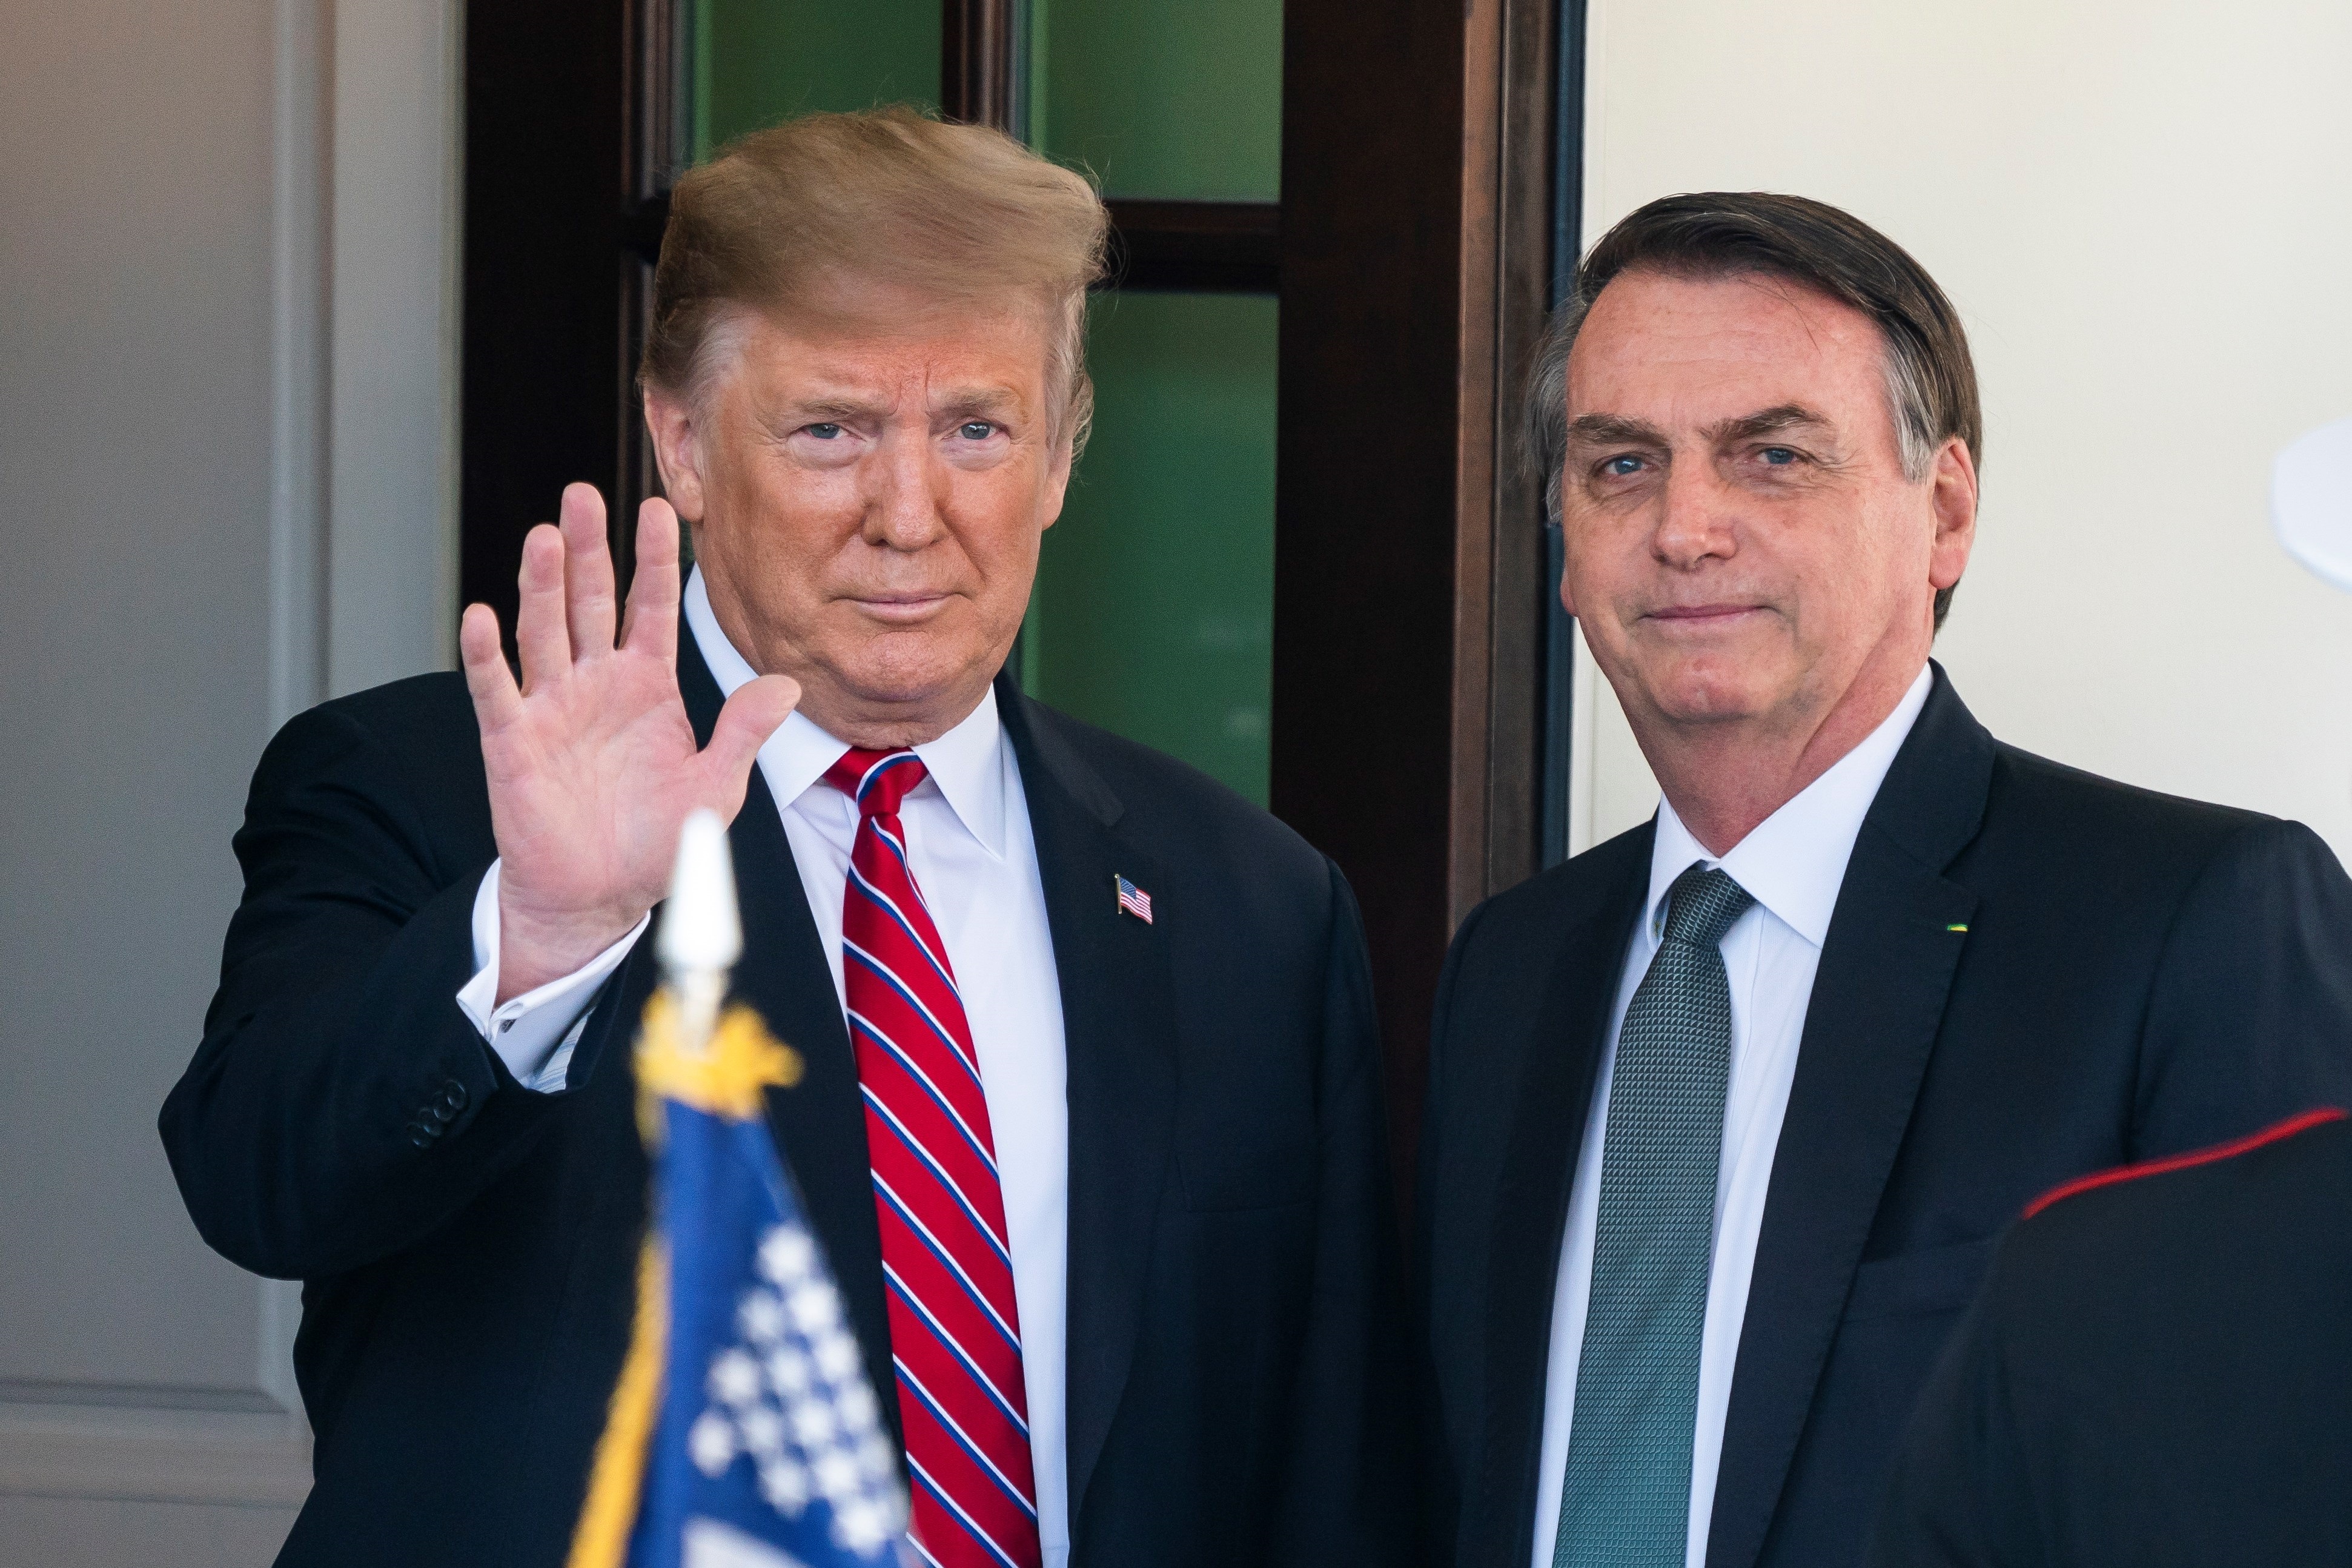 File photo of Donald Trump, former President of the United States, and Jair Bolsonaro, President of Brazil (EFE/Jim Lo Scalzo)